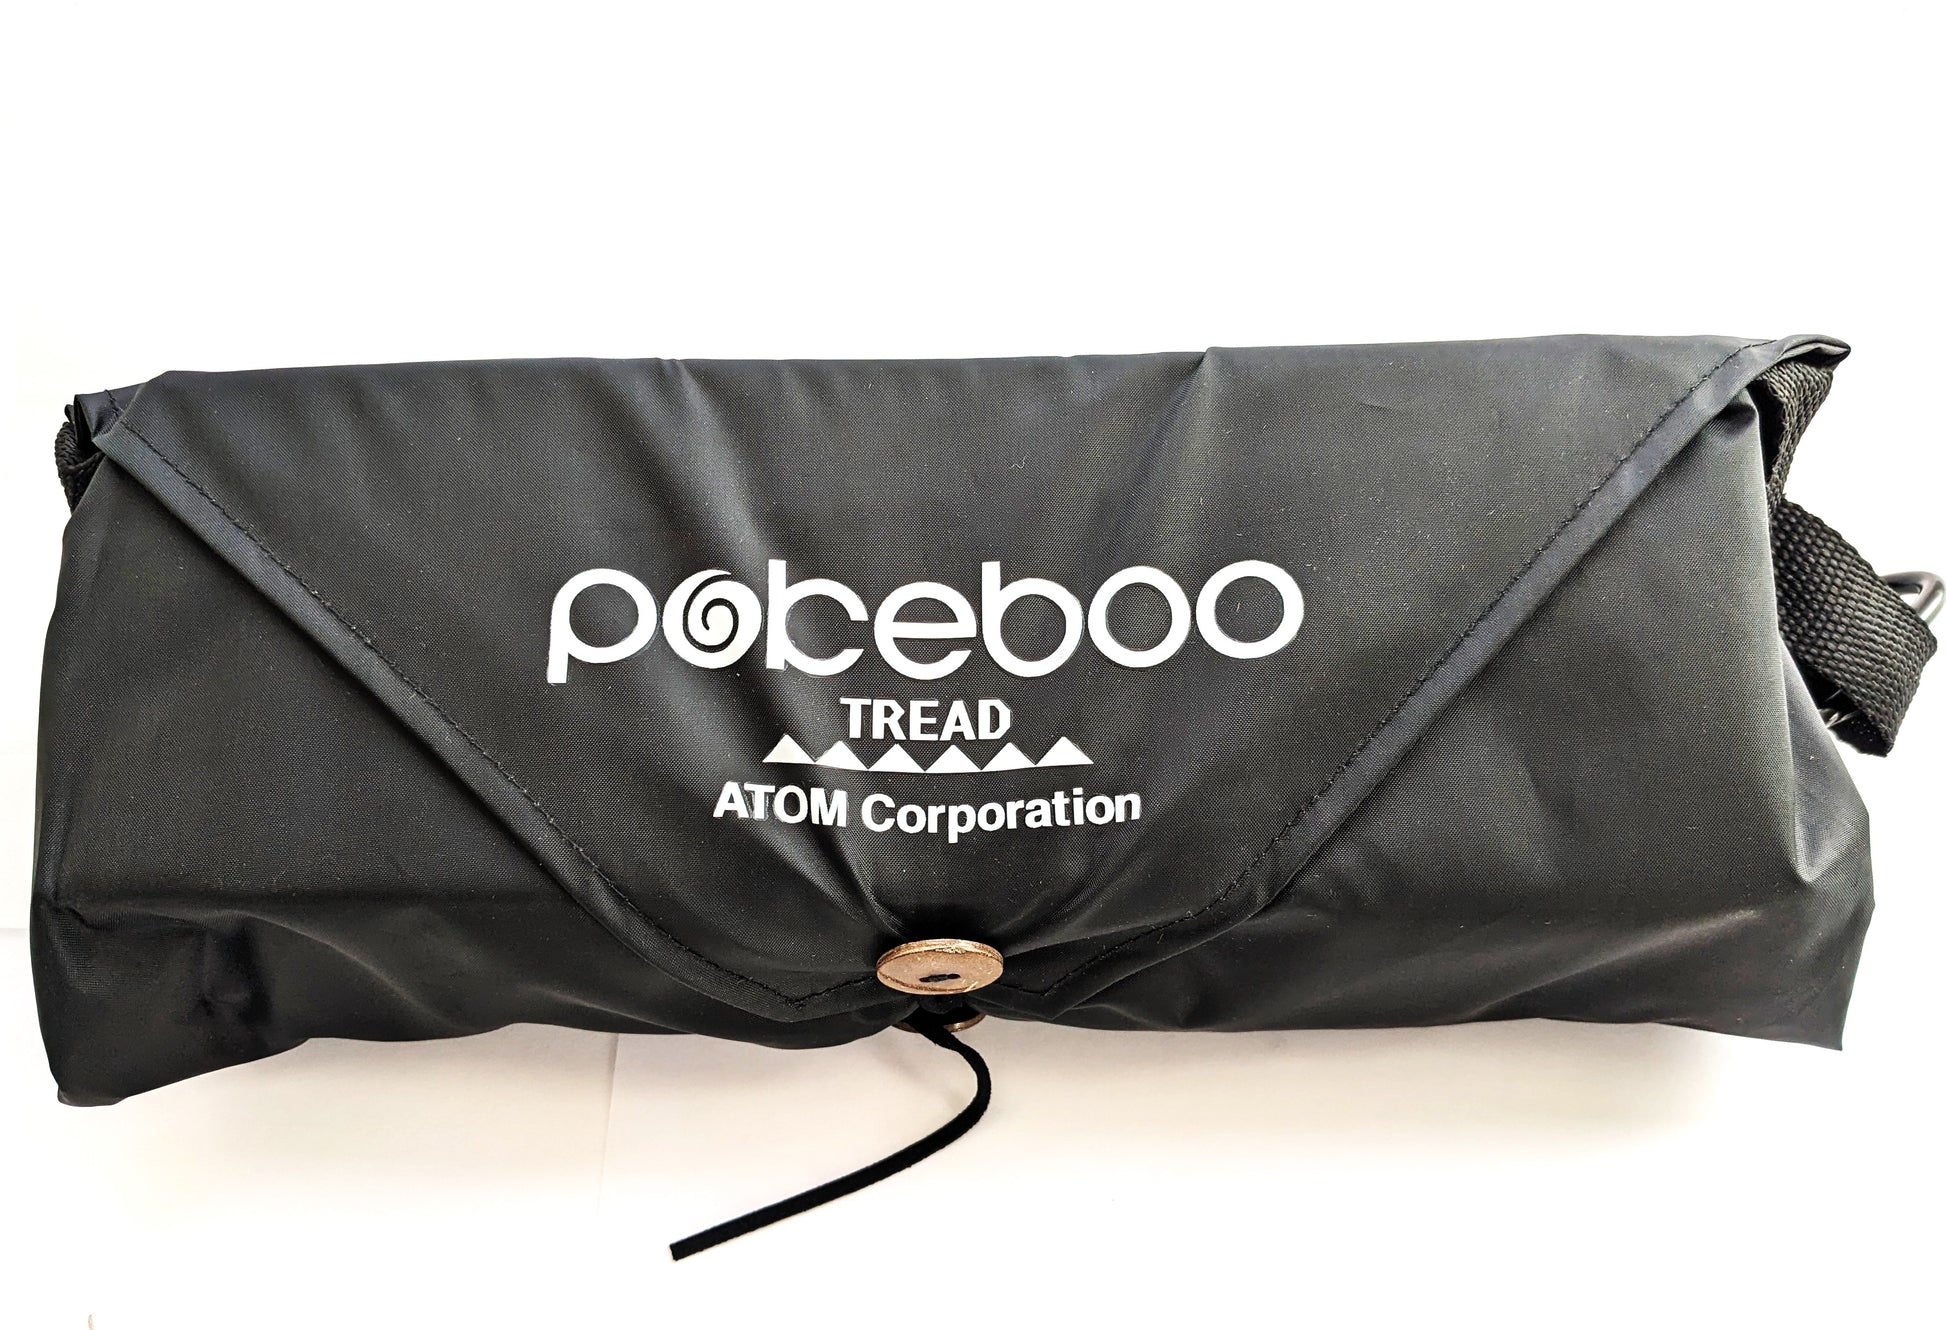 Pokeboo TREAD Carry Bag